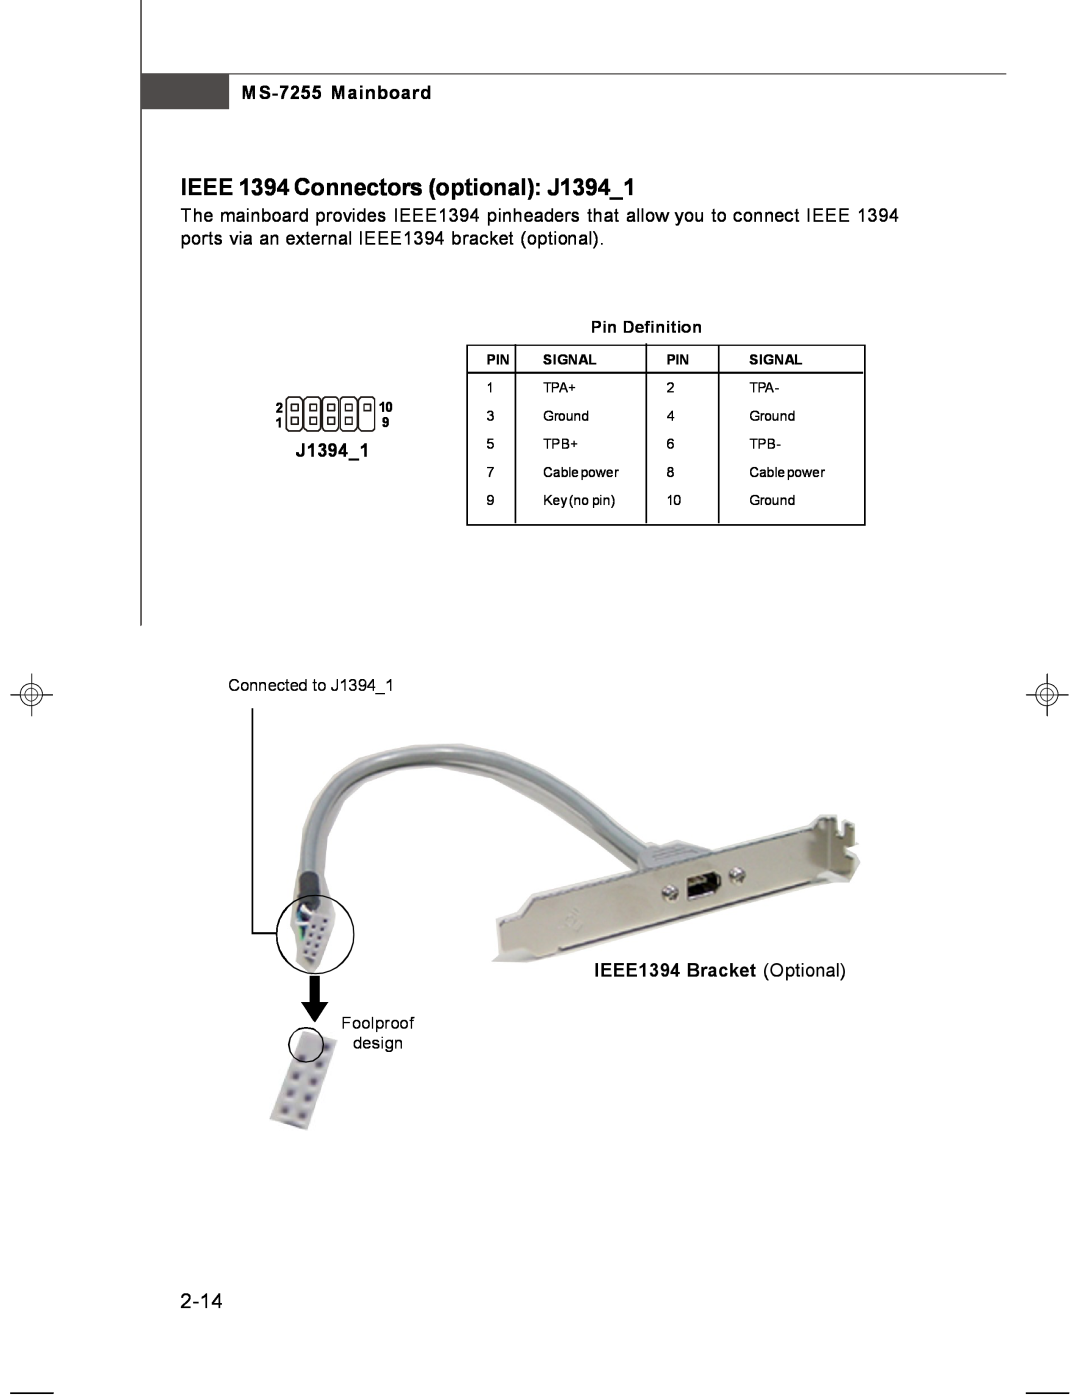 MSI IEEE 1394 Connectors optional J13941, 2-14, IEEE1394 Bracket Optional, MS-7255 Mainboard, Pin Definition, Signal 